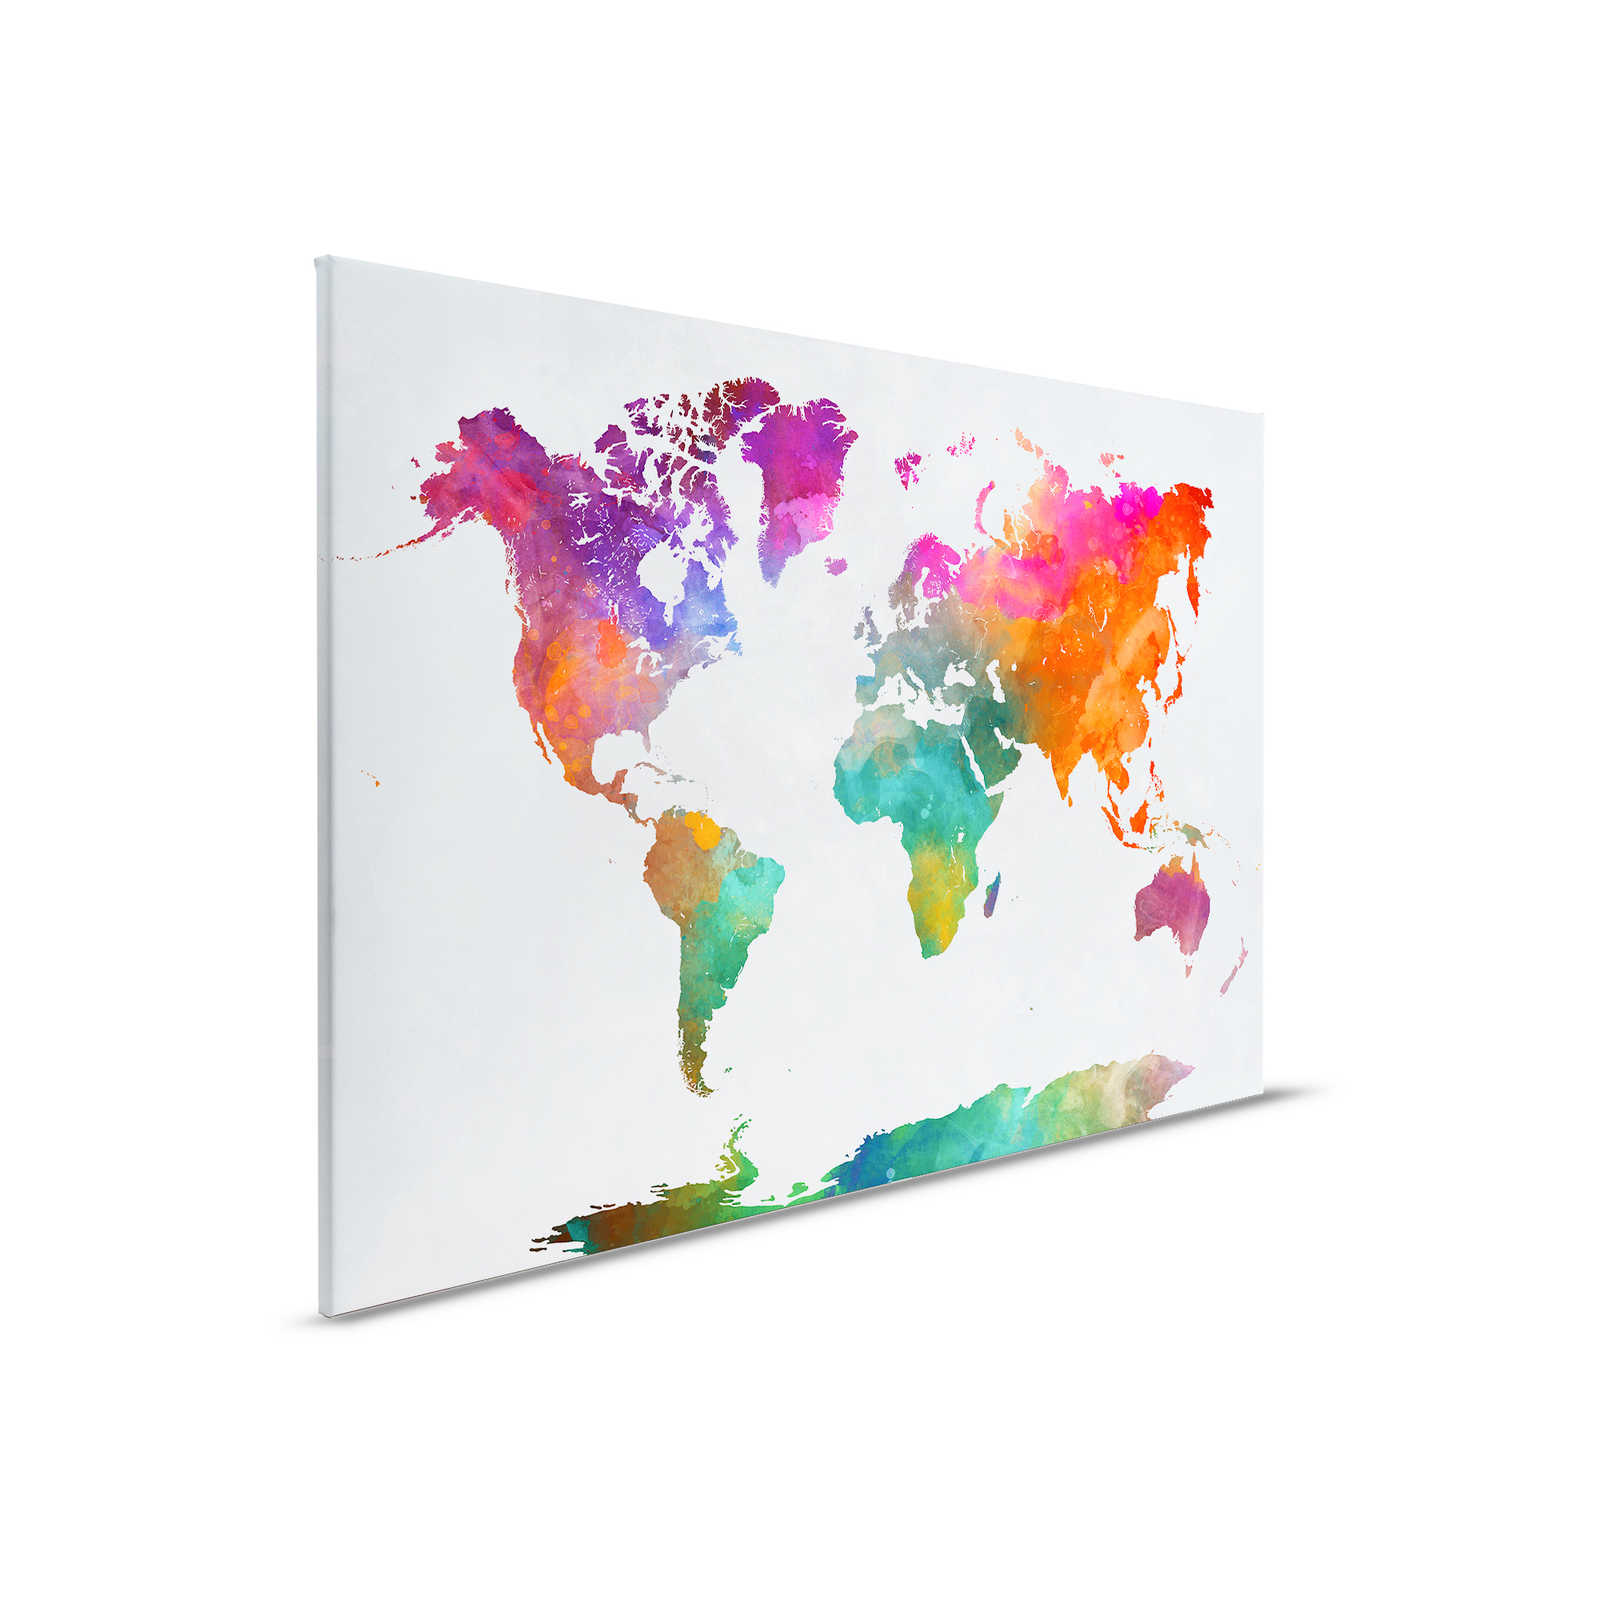         Canvas colourful world map - 0,90 m x 0,60 m
    